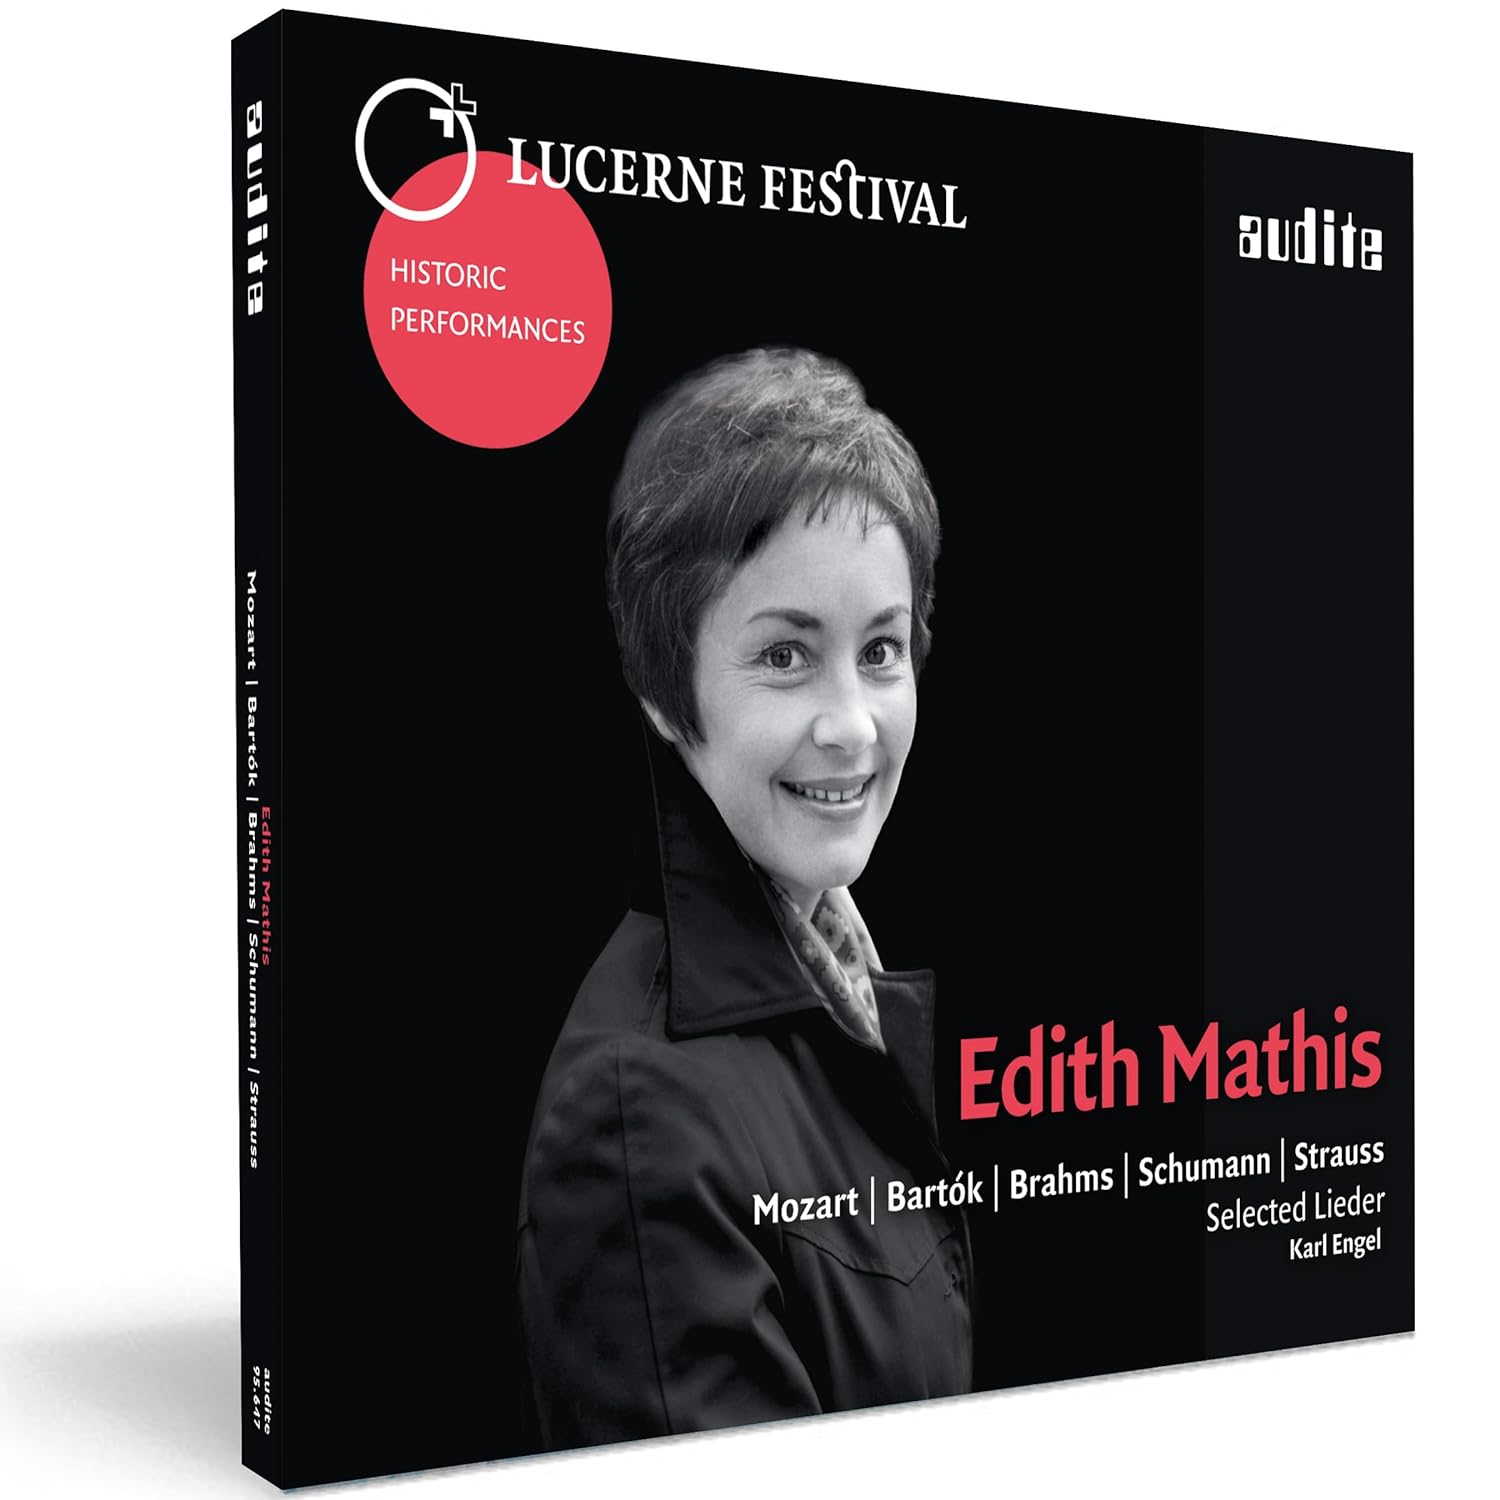 Edith Mathis / Karl Engel 1975년 루체른 독창회 실황 - 모차르트, 브람스, 슈만, 슈트라우스, 볼프, 버르토크 (Lieder Recital)